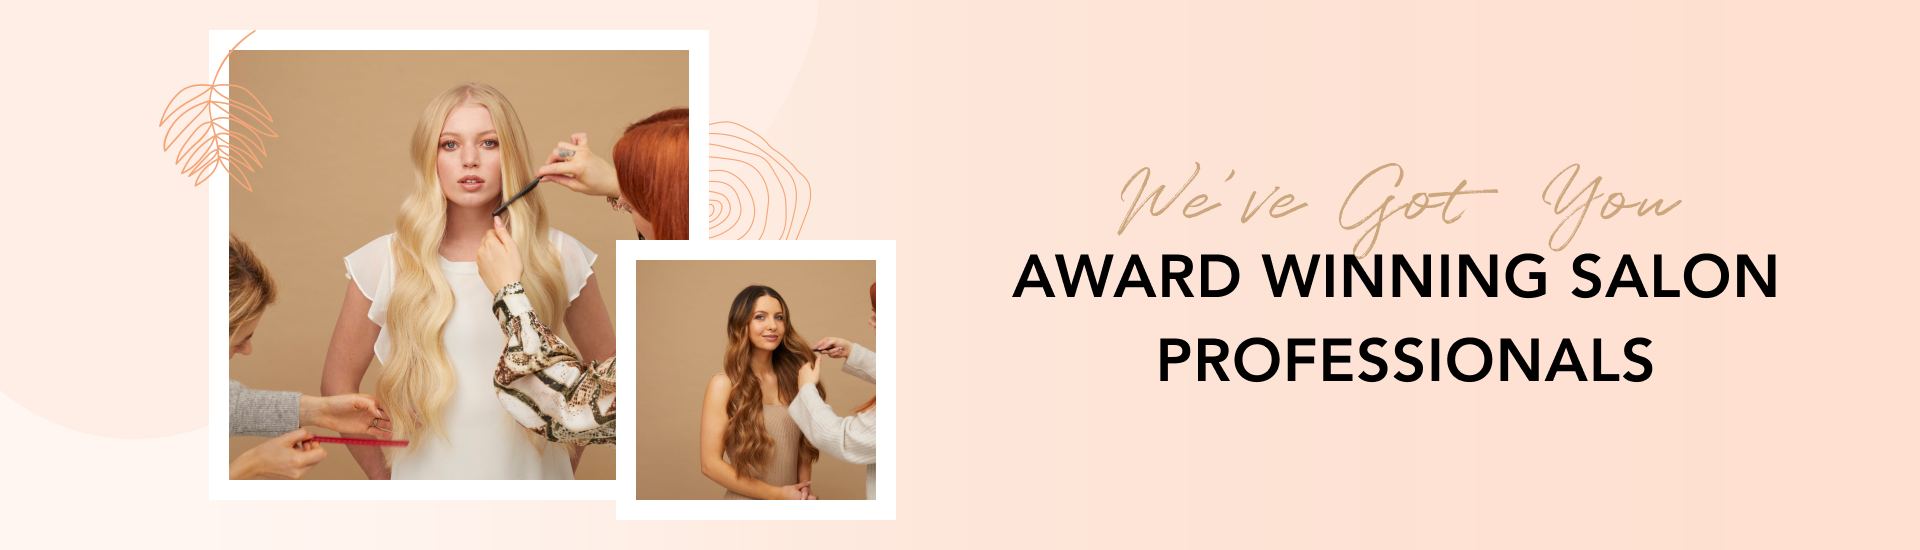 Superior Hair Extensions Award Winning Salon Professionals